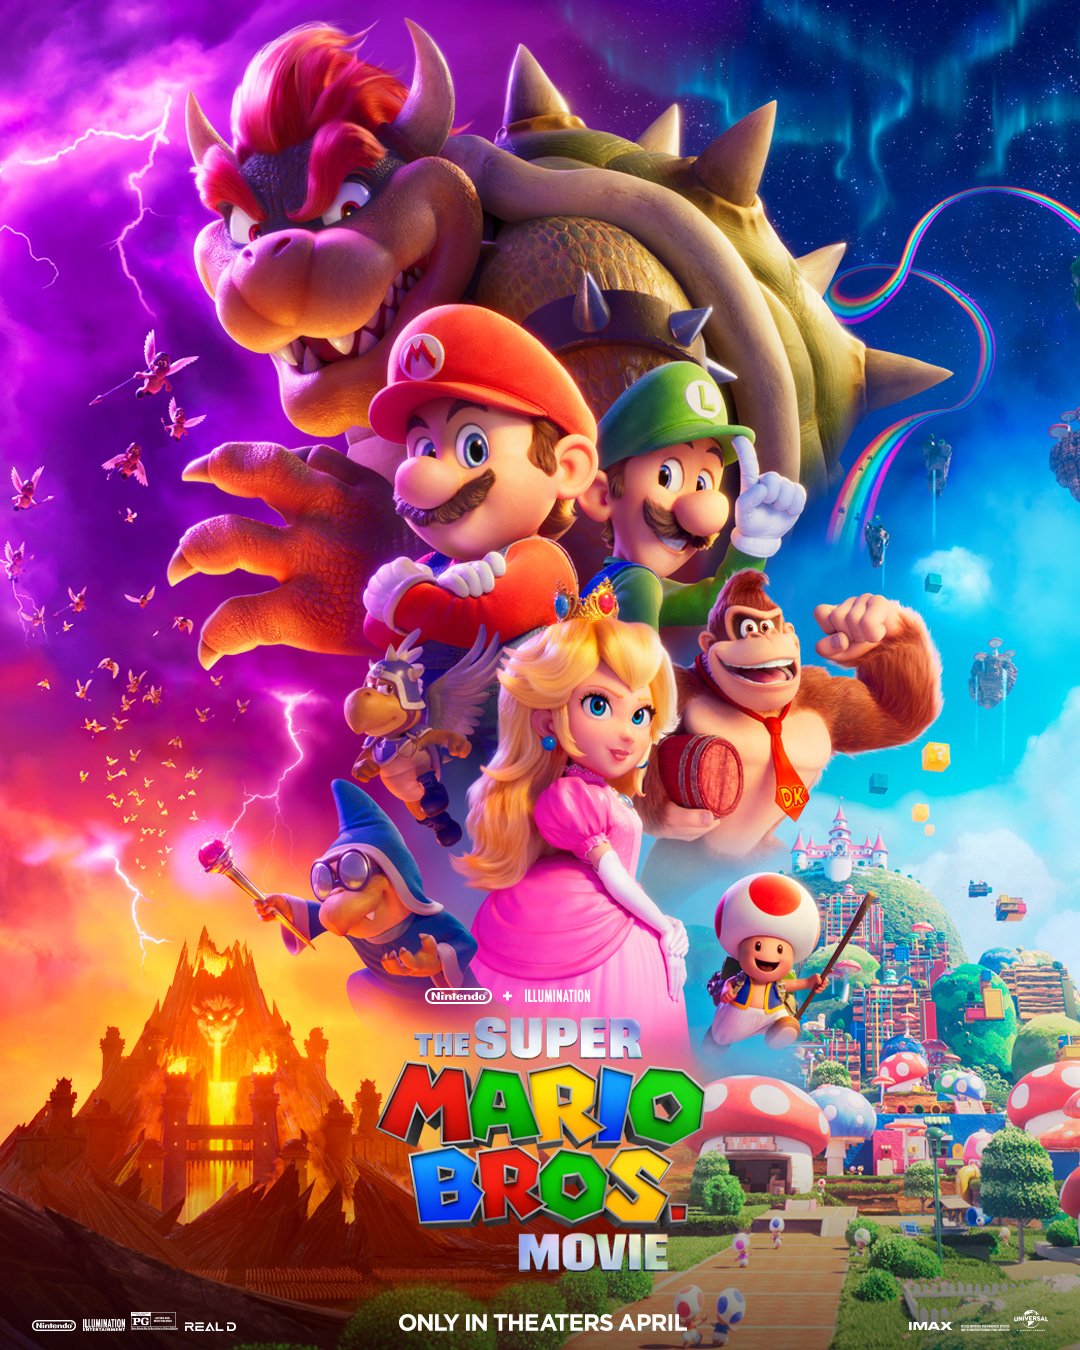 Super Mario Bros: O Filme (2022) -Trailer - [Fan-Edit] 